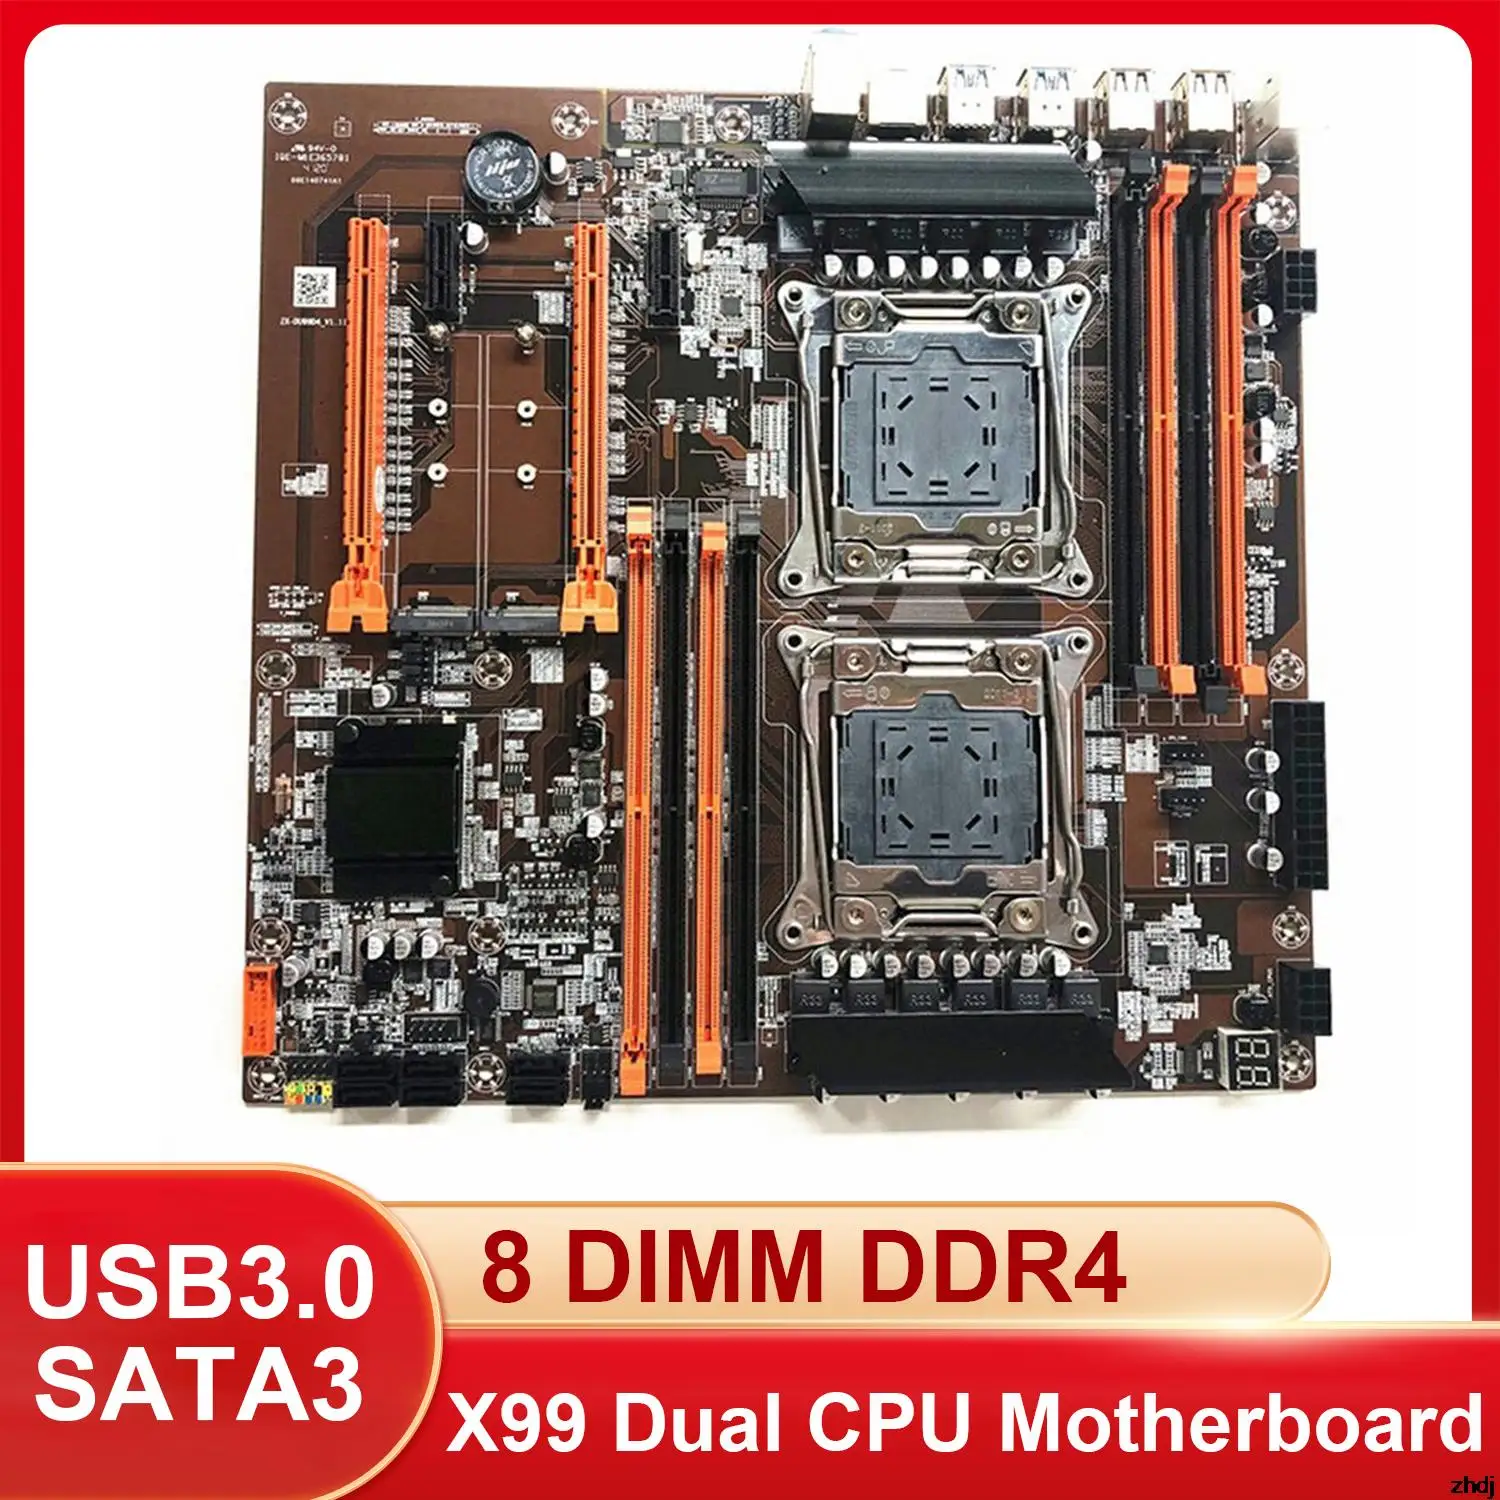 

X99 Dual CPU Motherboard LGA 2011 v3 With Dual M.2 Slot 8 DIMM DDR4 E-ATX USB3.0 SATA3 With Dual Xeon Processor 4 PCIE Mainboard